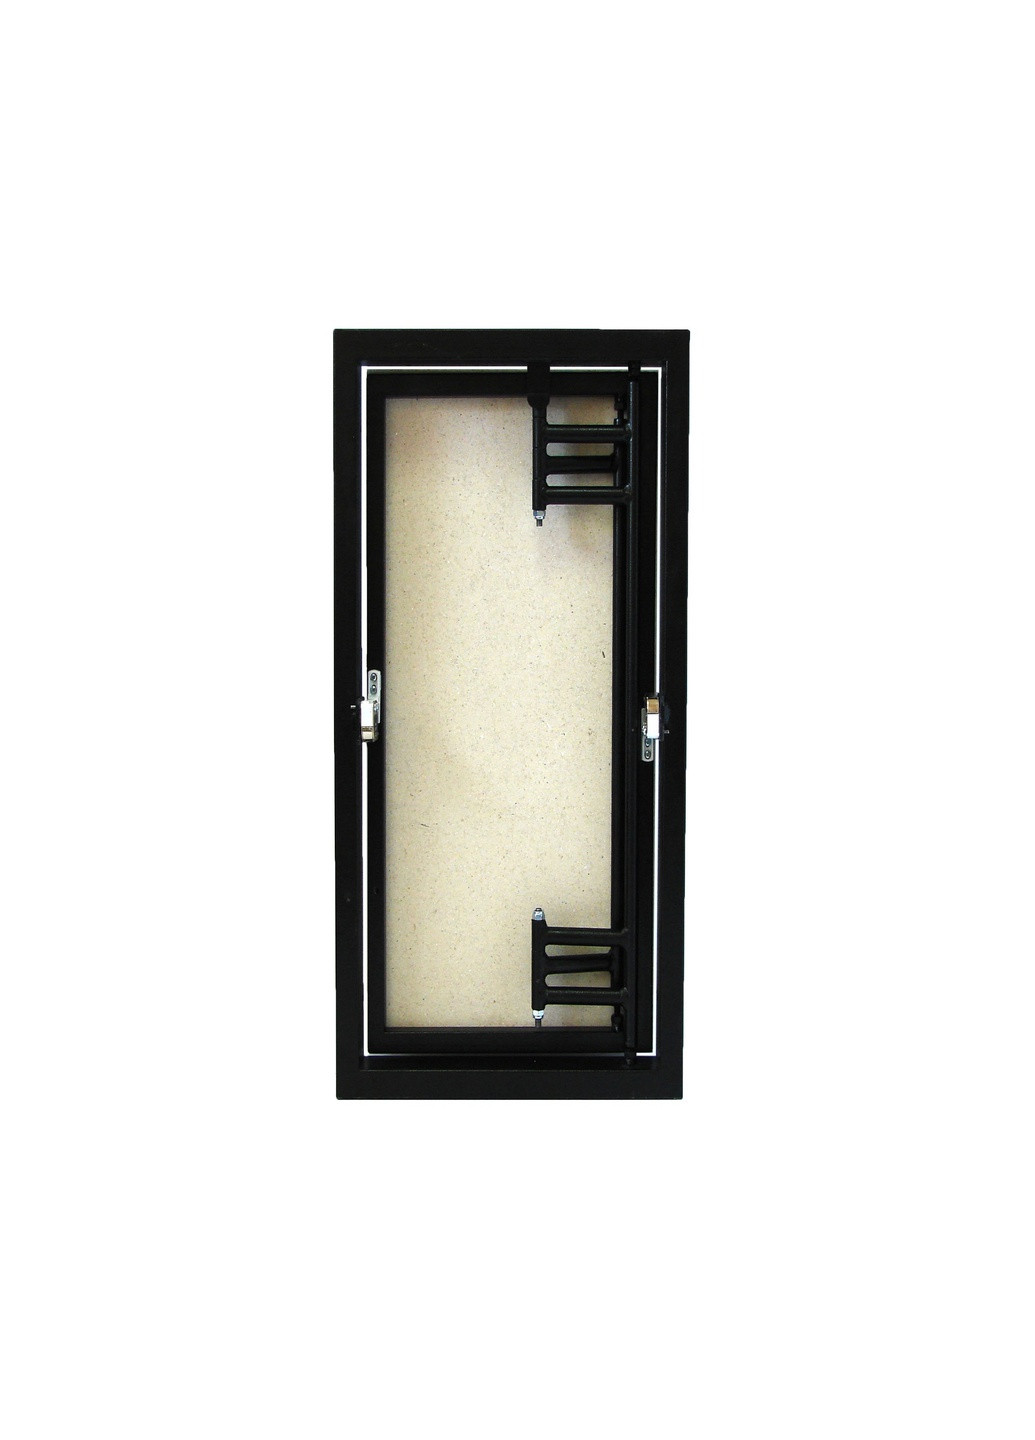 Ревизионный люк скрытого монтажа под плитку нажимного типа 300x900 ревизионная дверца для плитки (1134) S-Dom (264208731)